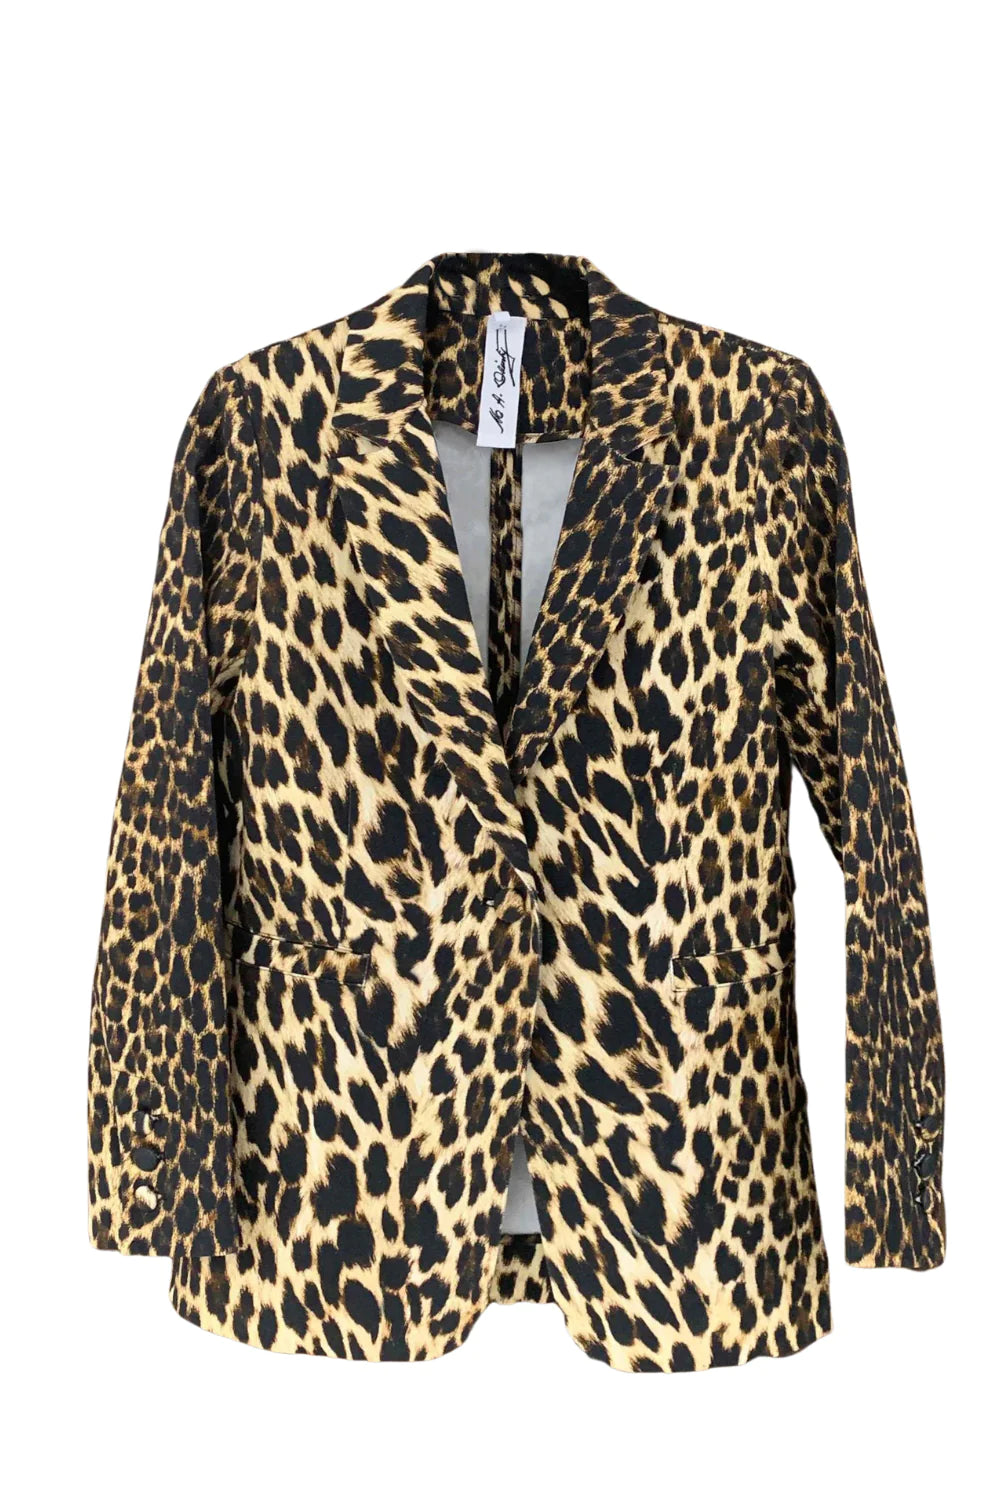 M. A. Dainty Zazzle Jacket Leopard